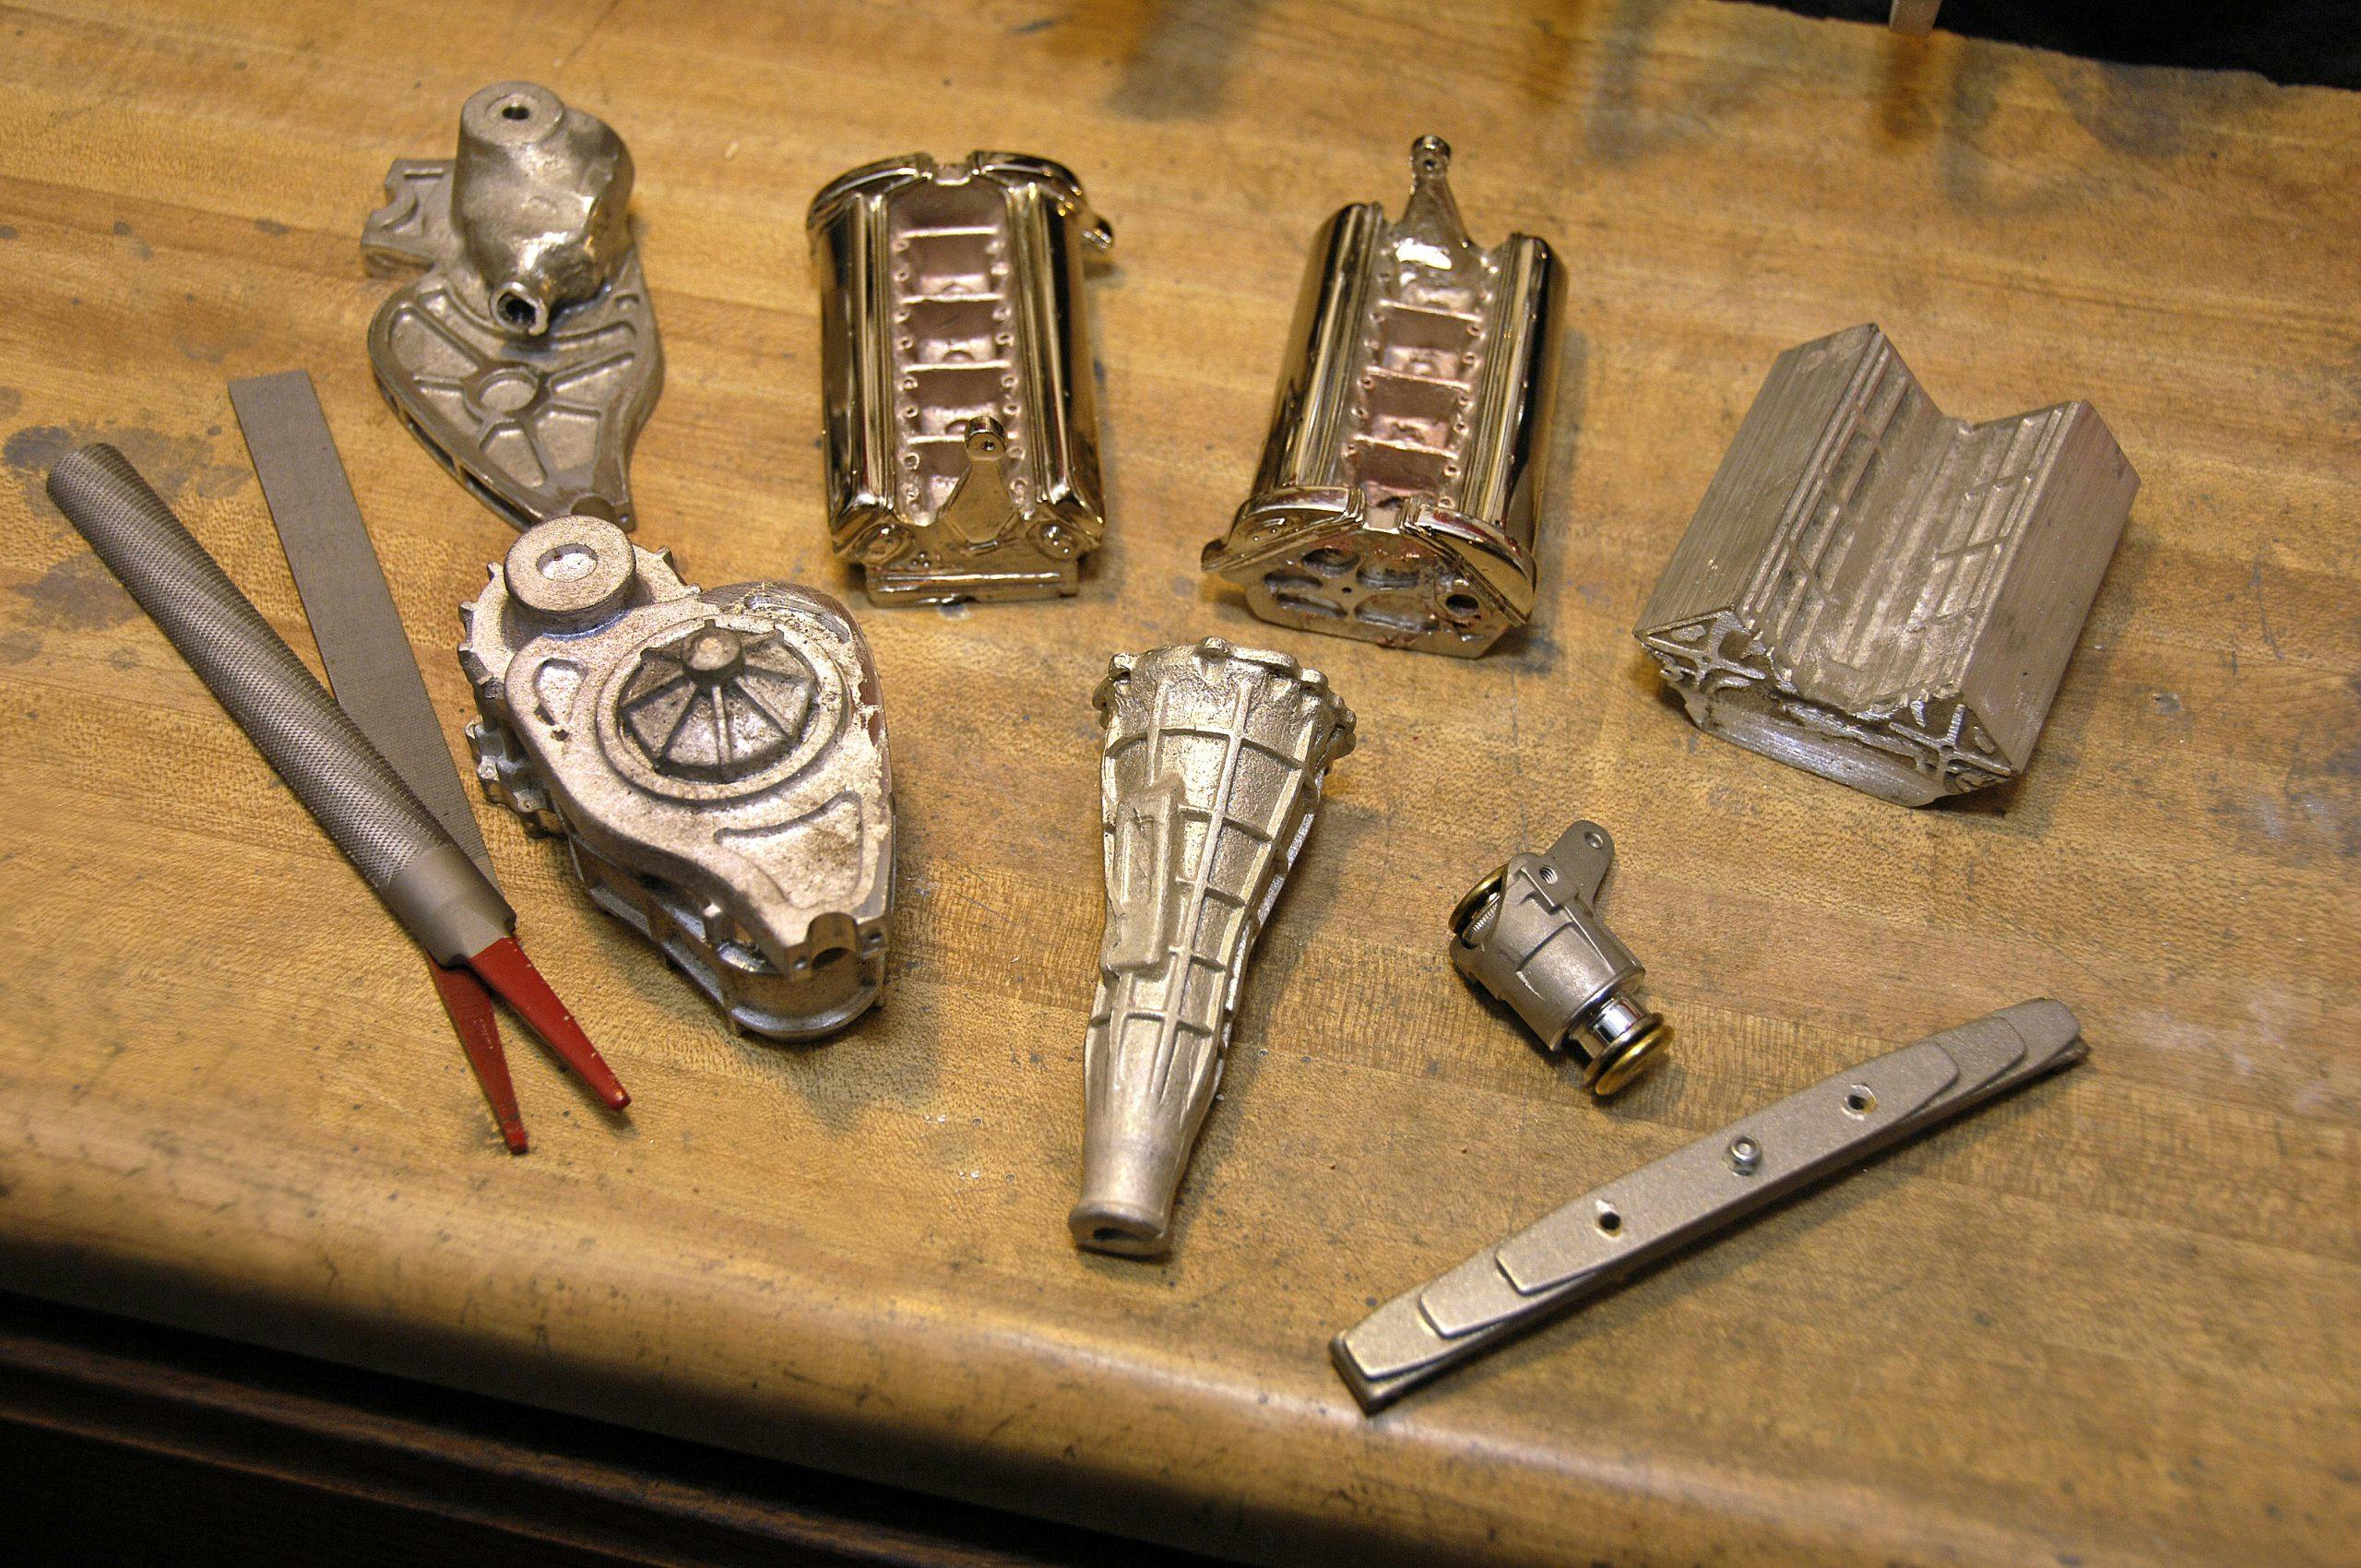 ferrari scale model parts on table detail